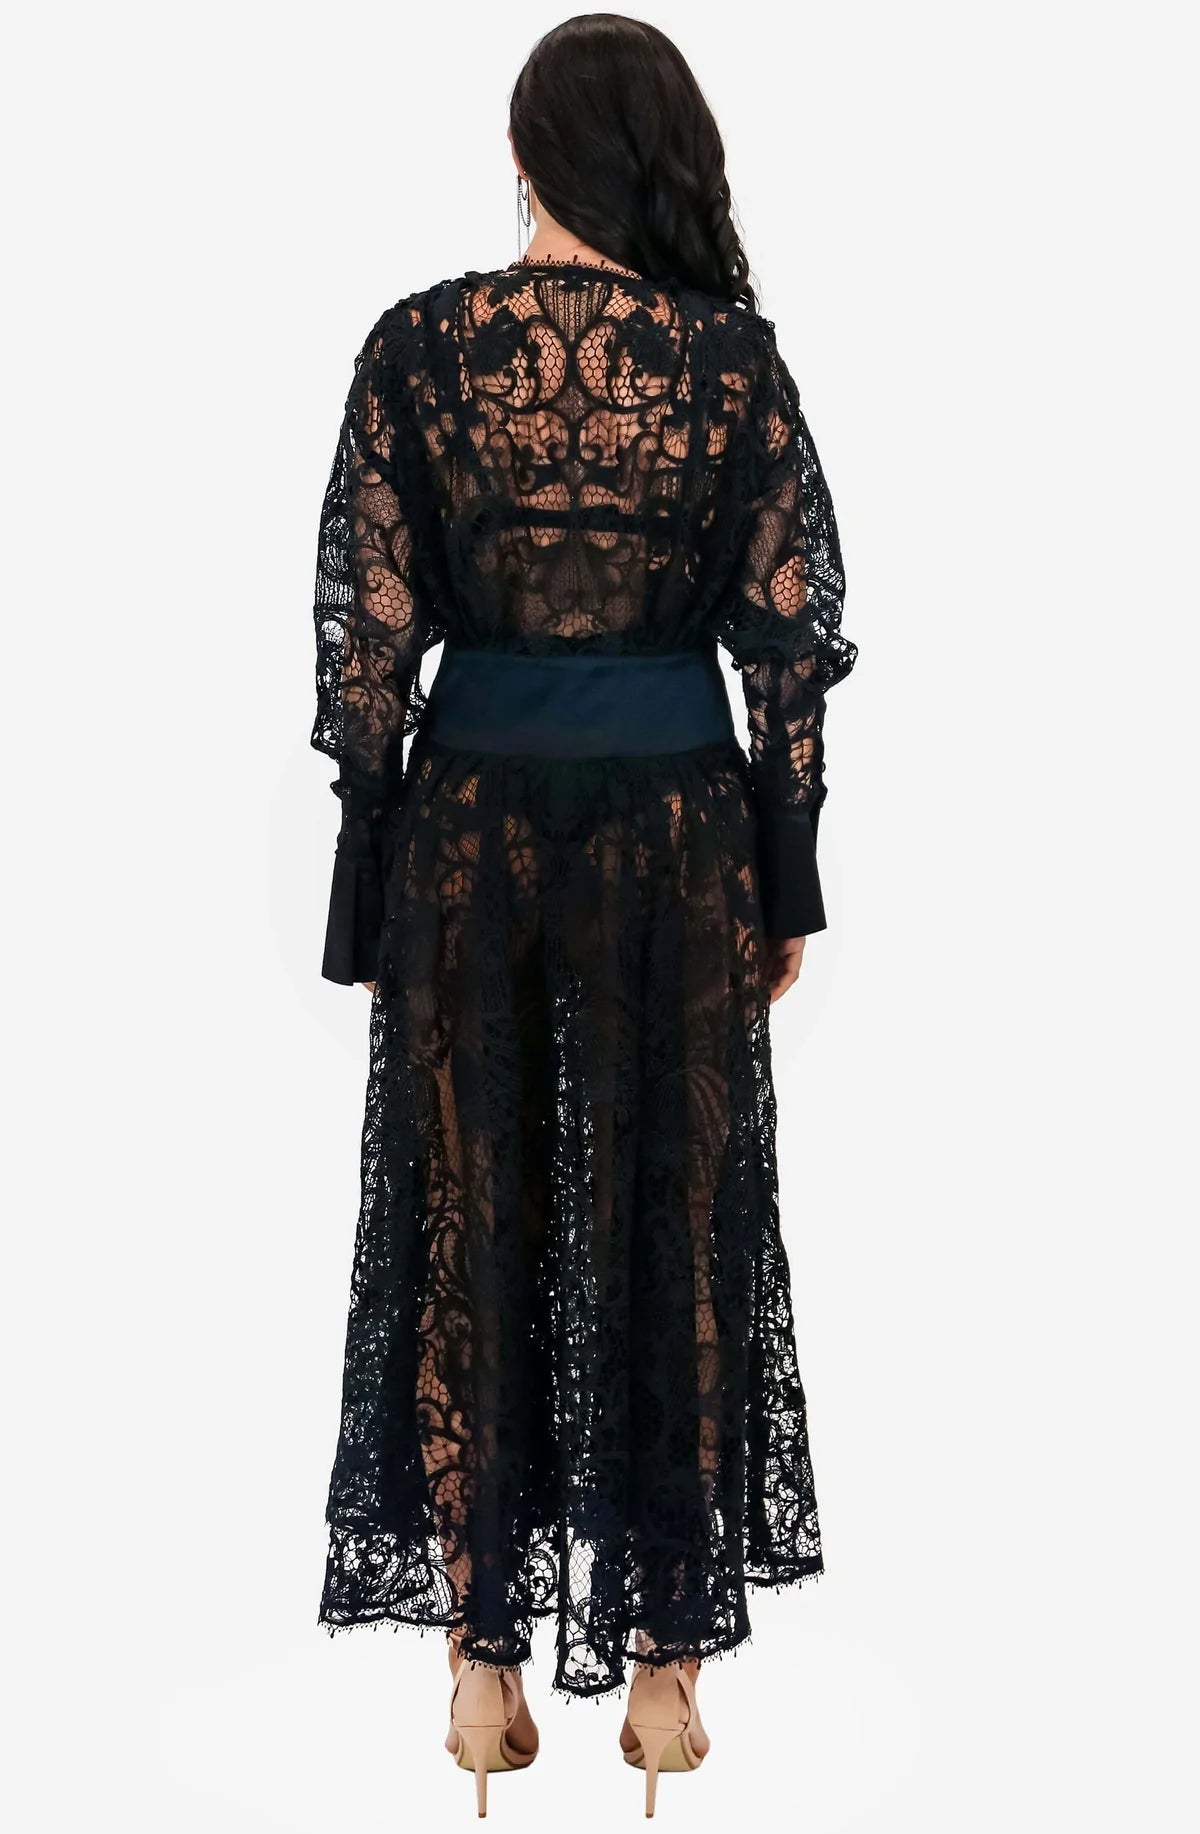 LEO LIN Black Juno Lace Dress - Pinkhill, Darwin boutique, Australian high end fashion, Darwin Fashion